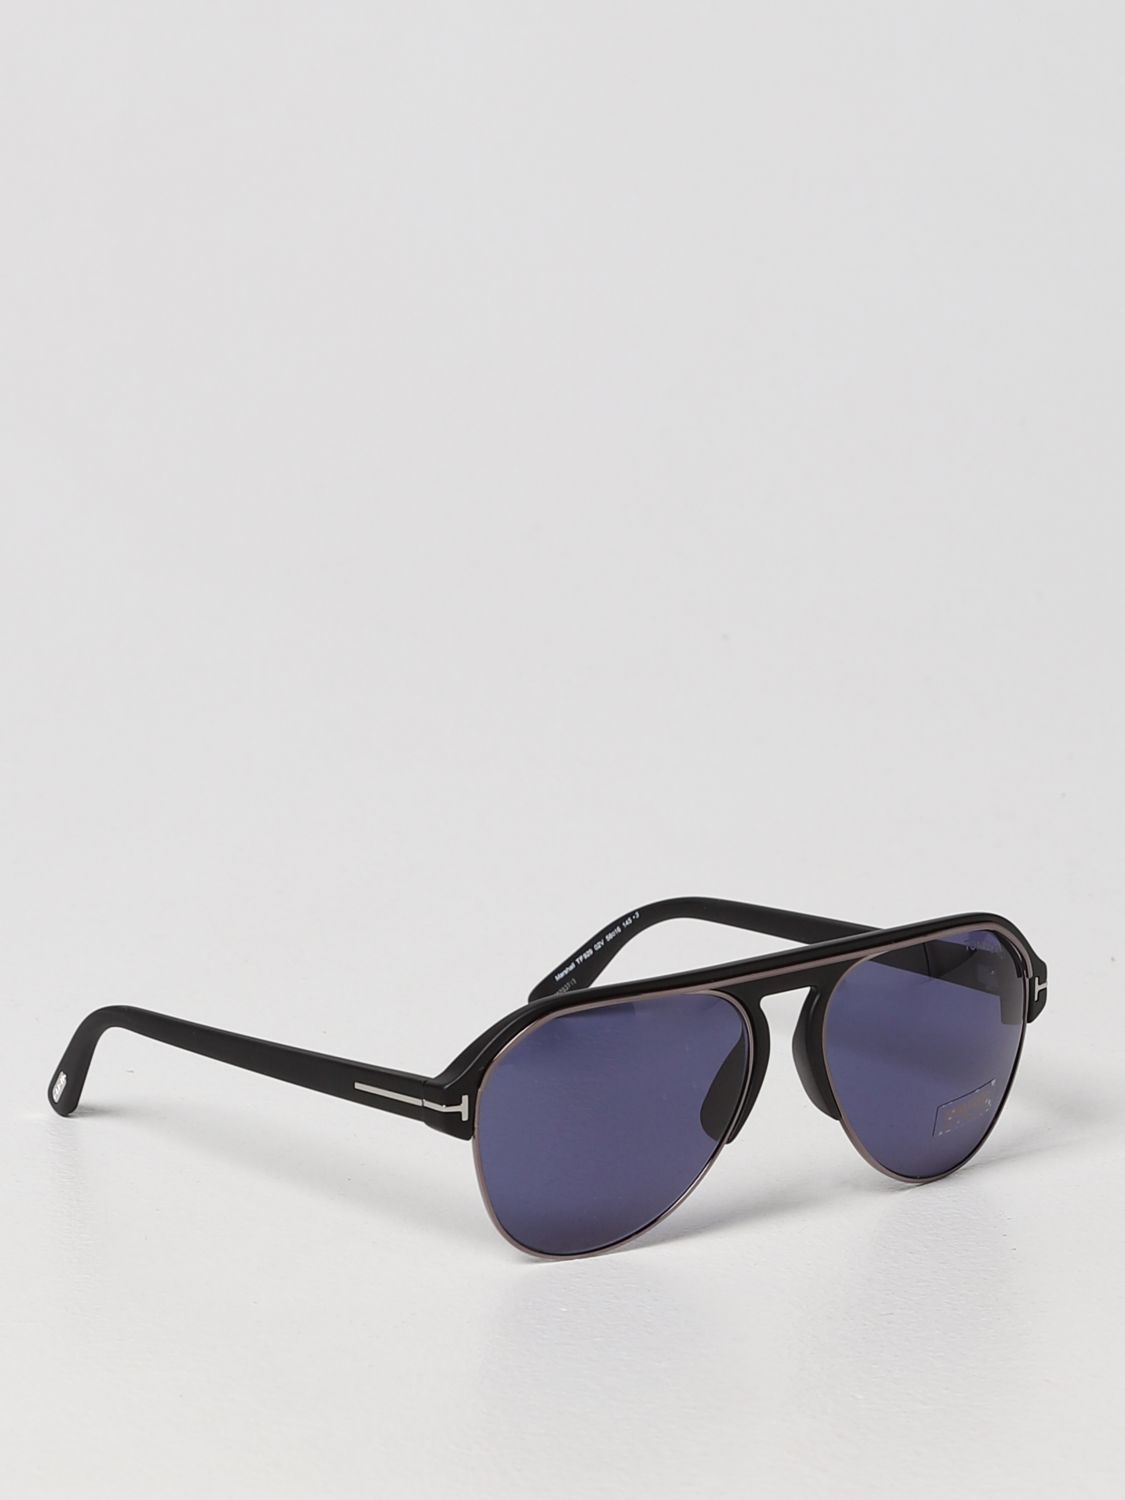 Glasses Tom Ford: TF 929 Marshall Tom Ford sunglasses black 1